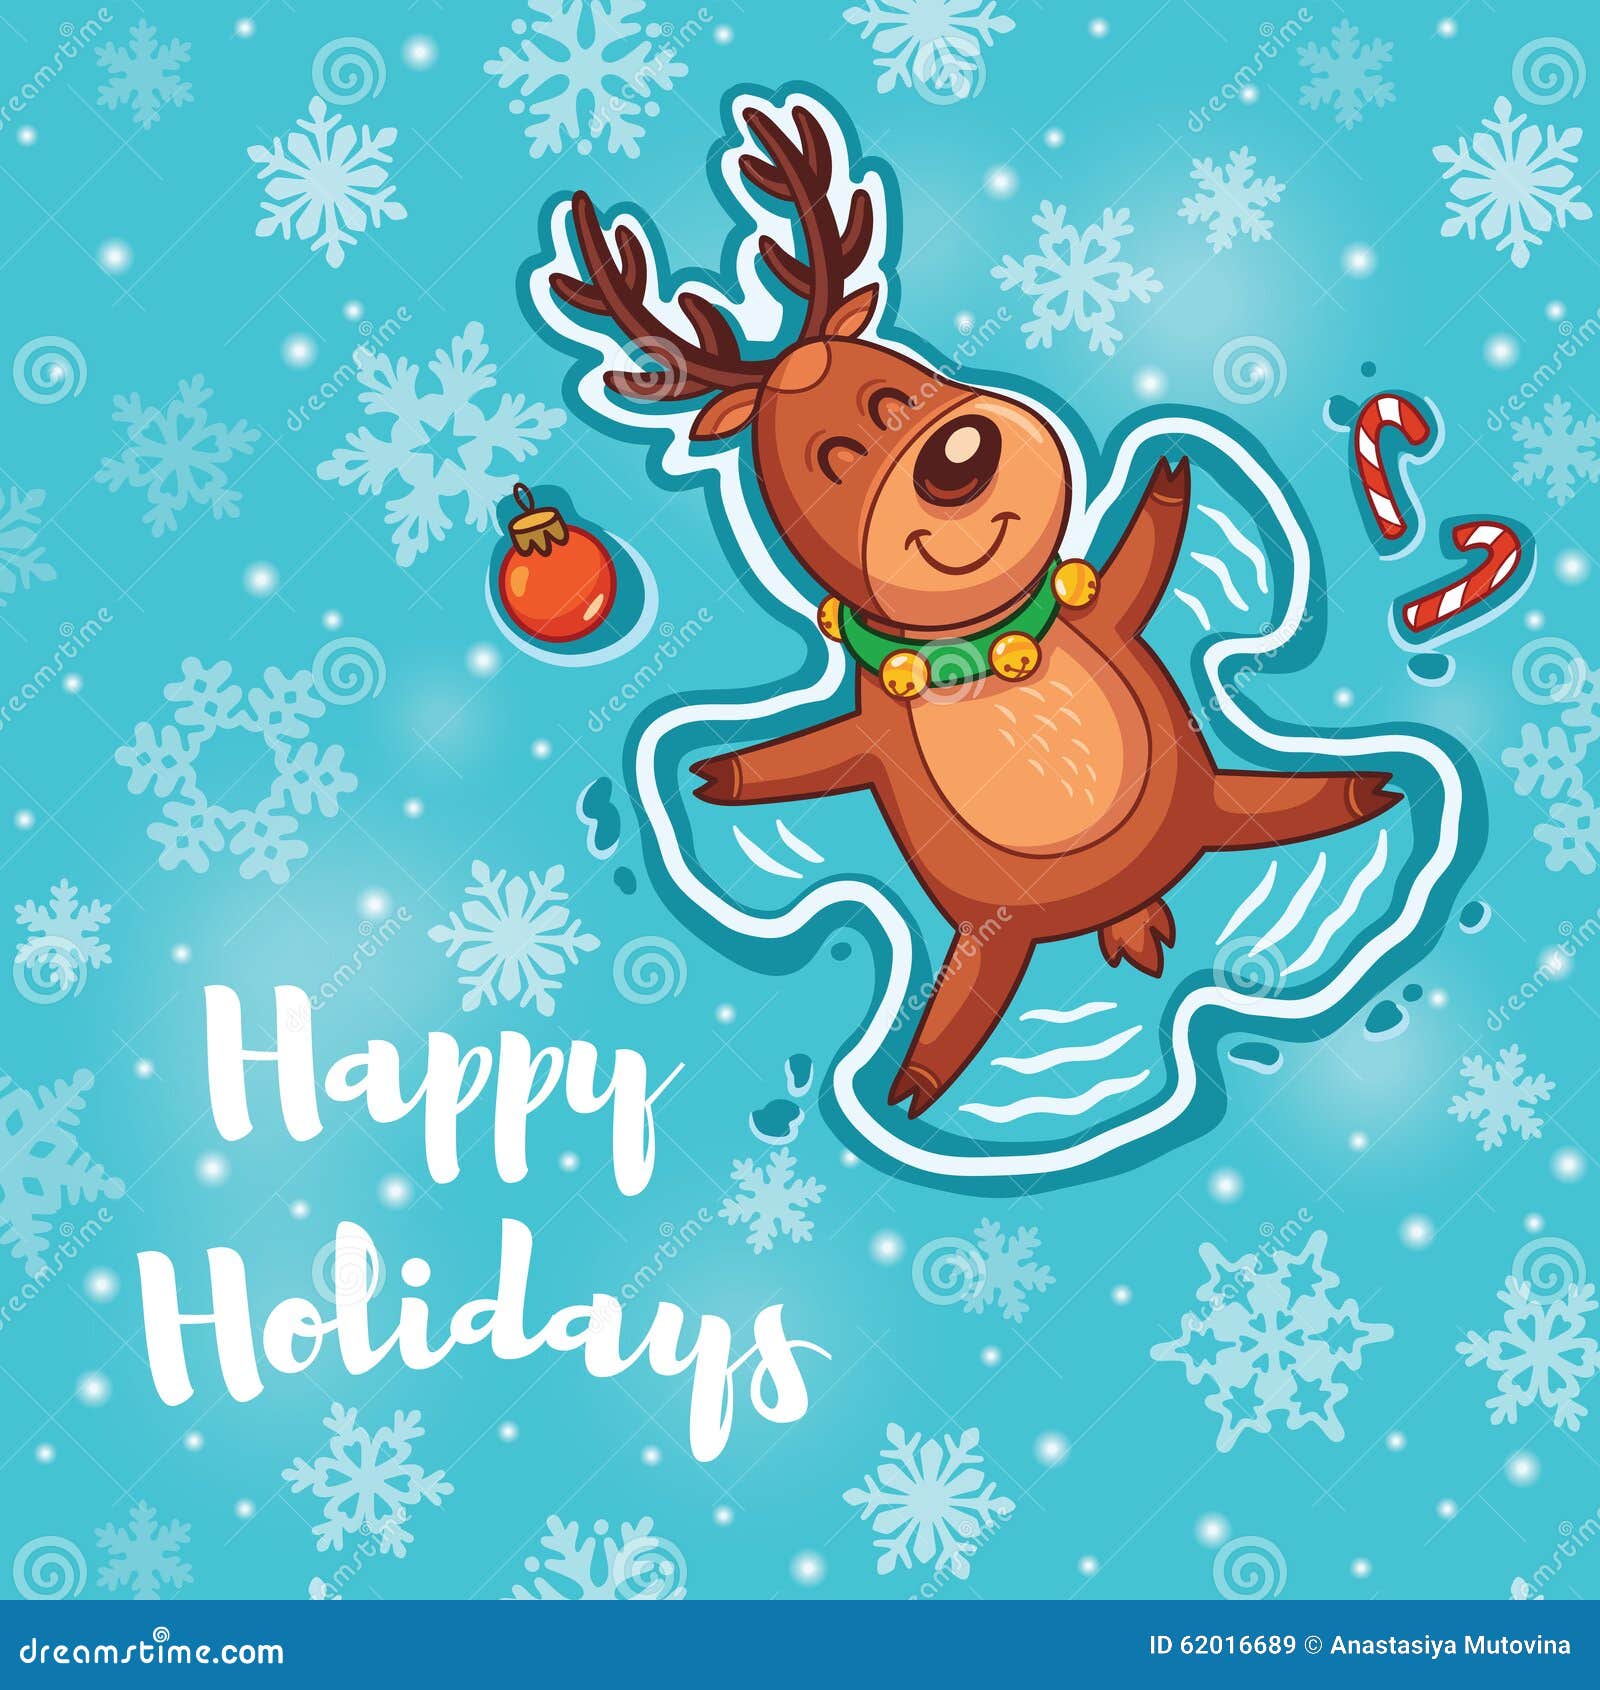 Happy Holidays Card With Cute Cartoon Deer - Snow Angel Stock Vector